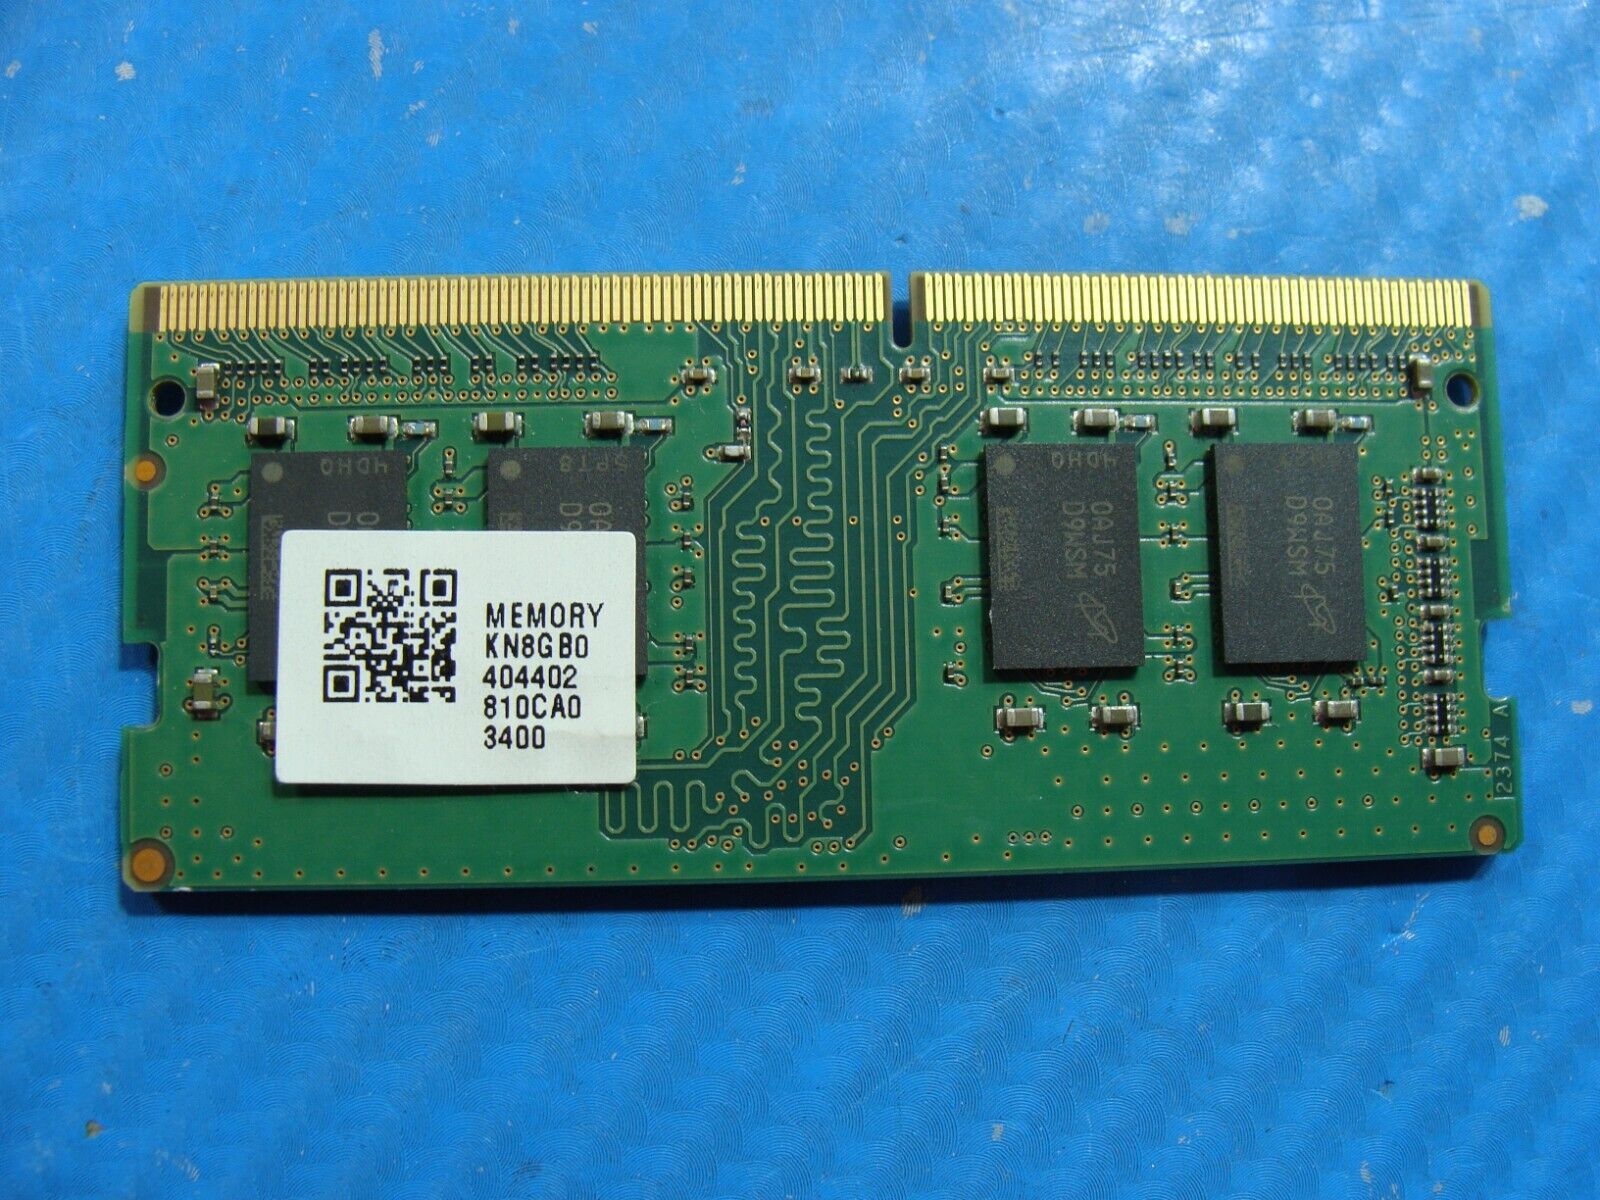 Acer PH315-53-781R Micron 8GB PC4-3200A SO-DIMM Memory RAM MTA8ATF1G64HZ-3G2J1